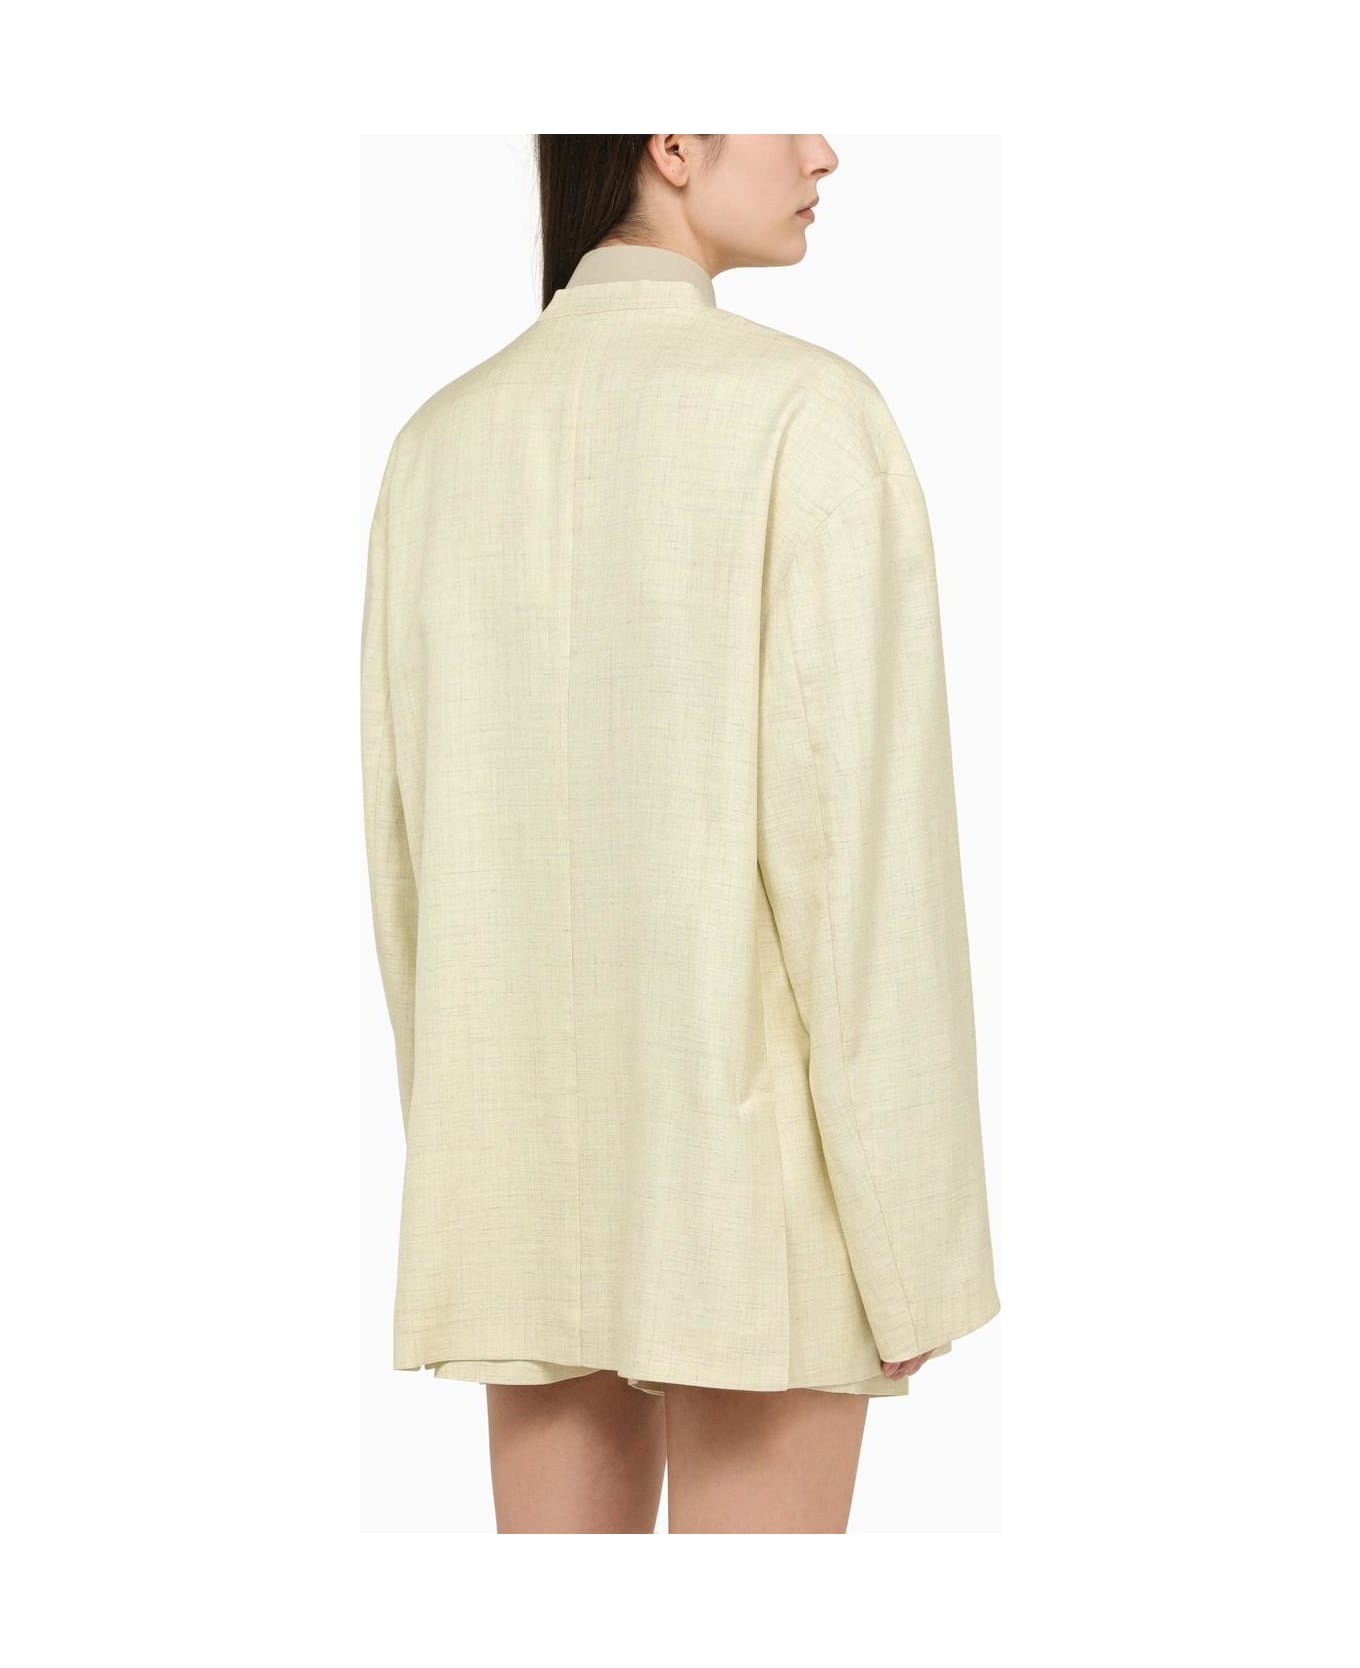 Philosophy di Lorenzo Serafini Light Yellow Single-breasted Jacket In Linen Blend - Fantasia gialla